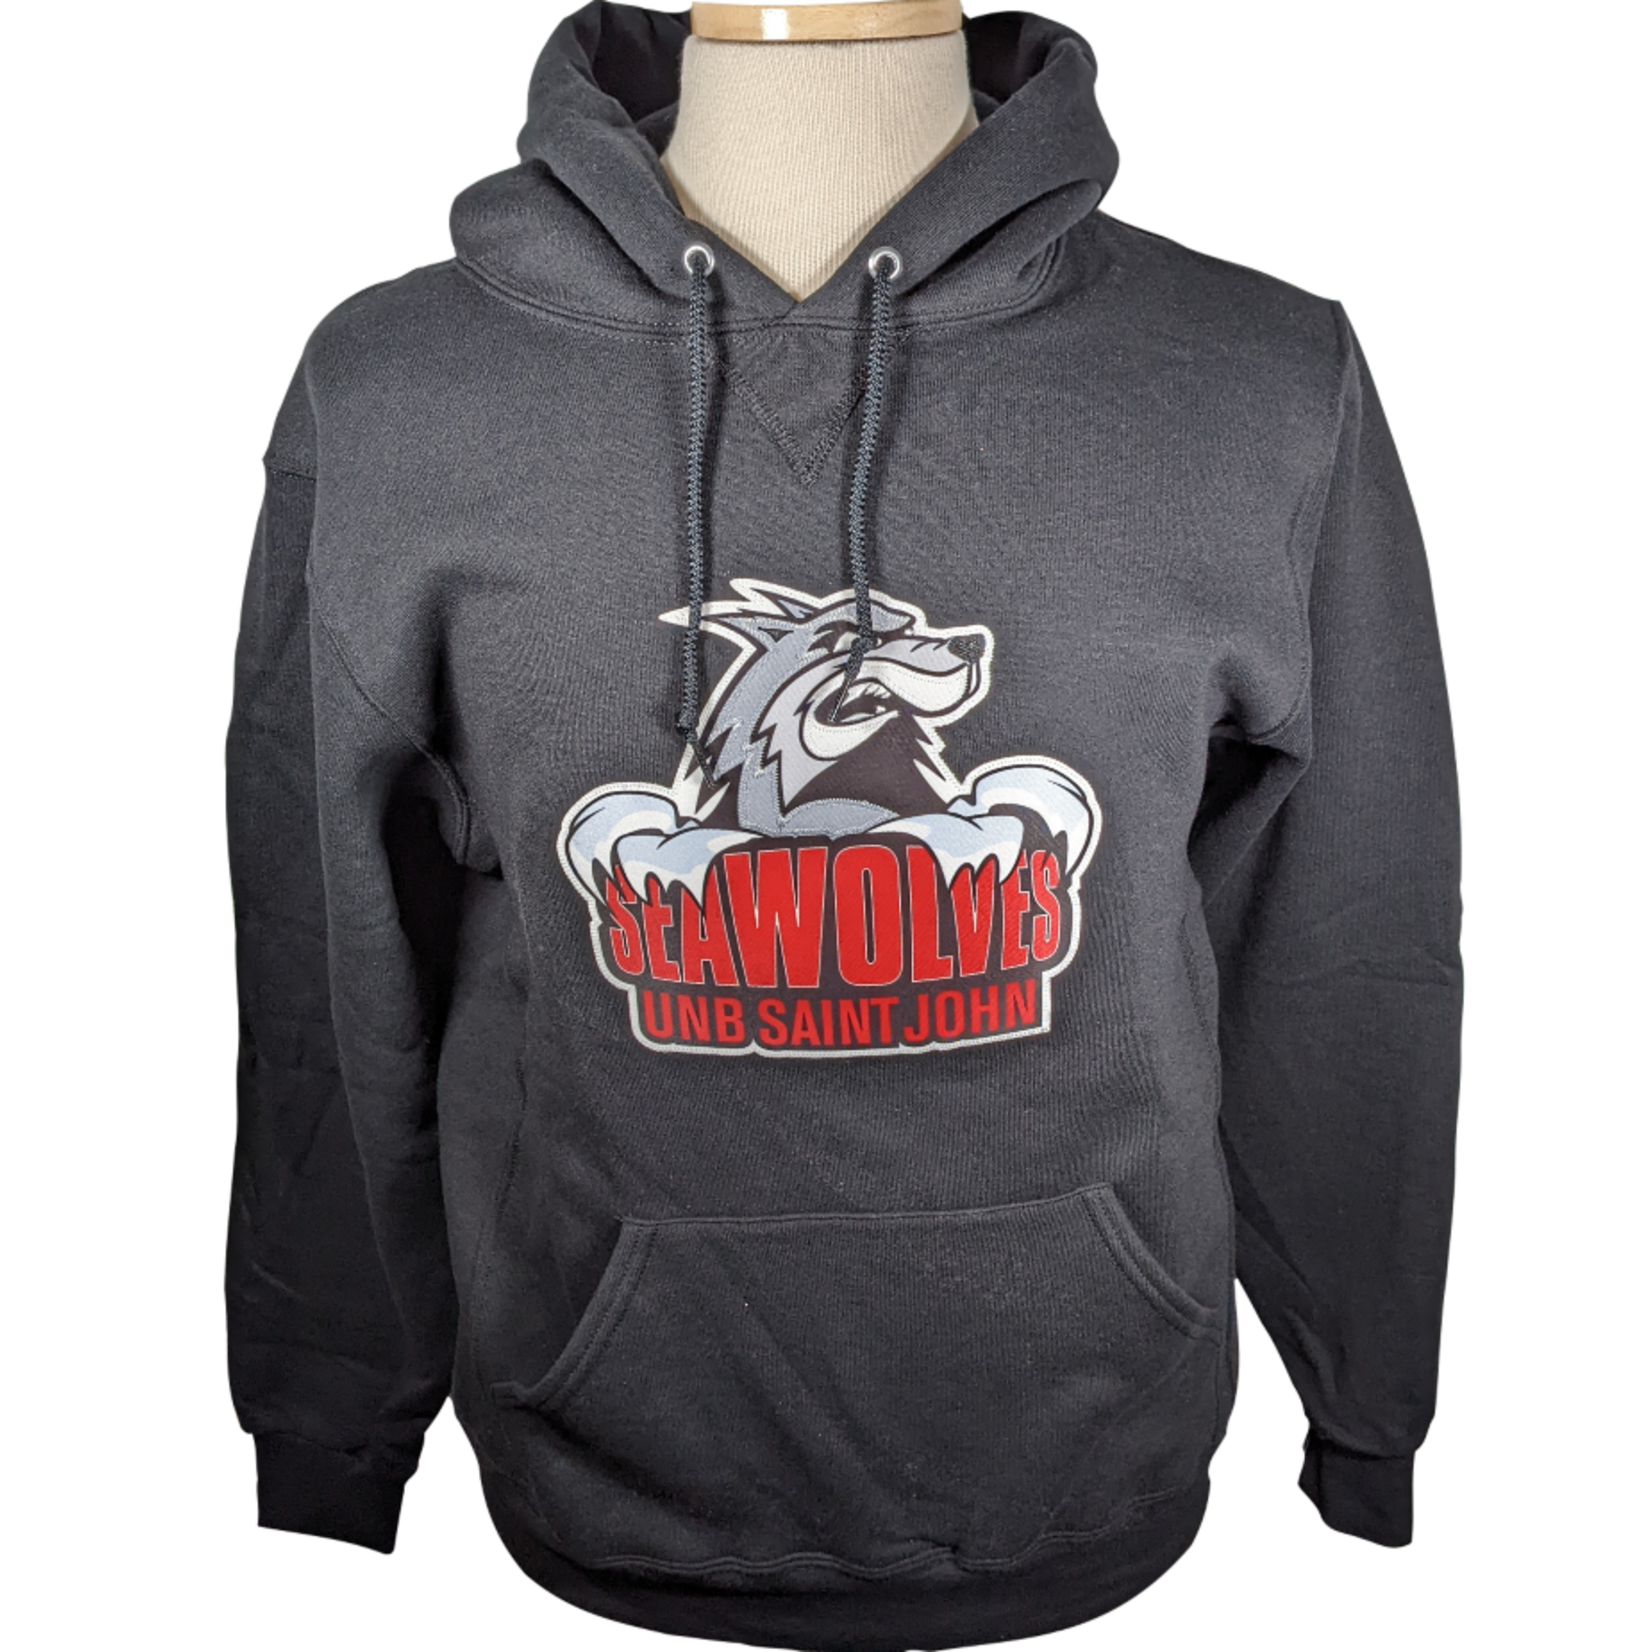 Russell Athletic Seawolves Dri-Power Pullover Fleece Hoodie